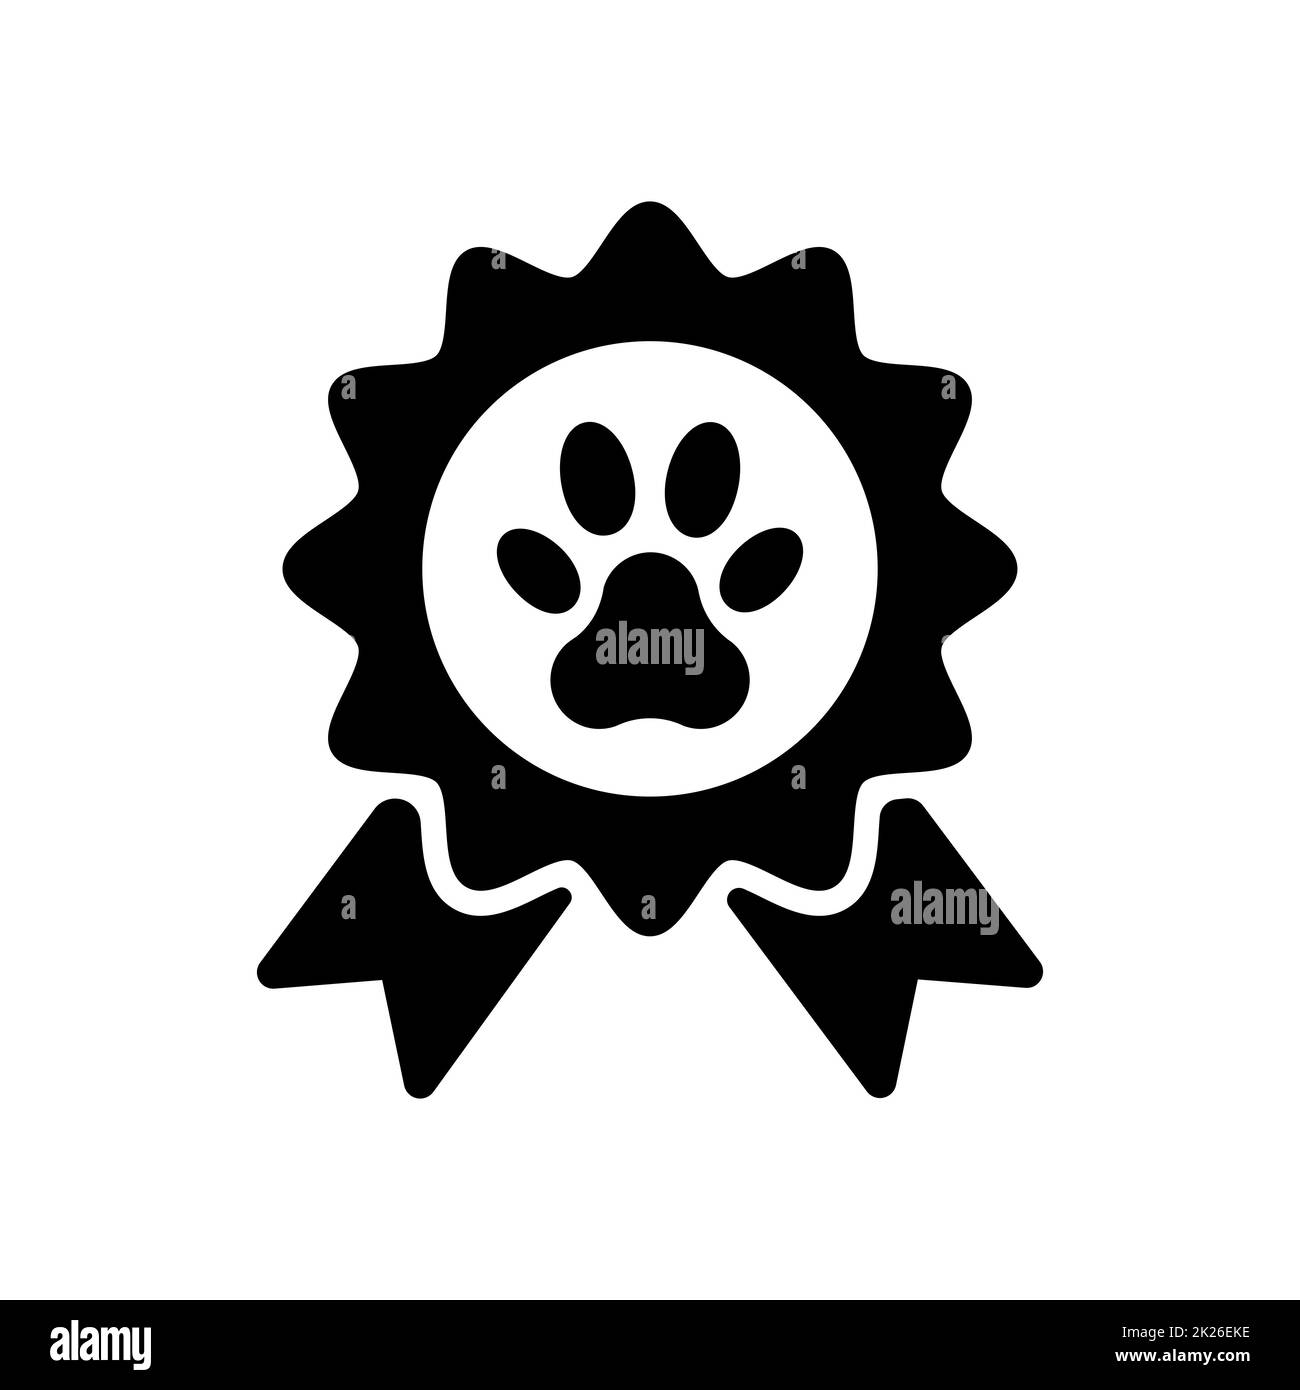 Pets award rosette vector glyph icon. Pet animal sign Stock Photo